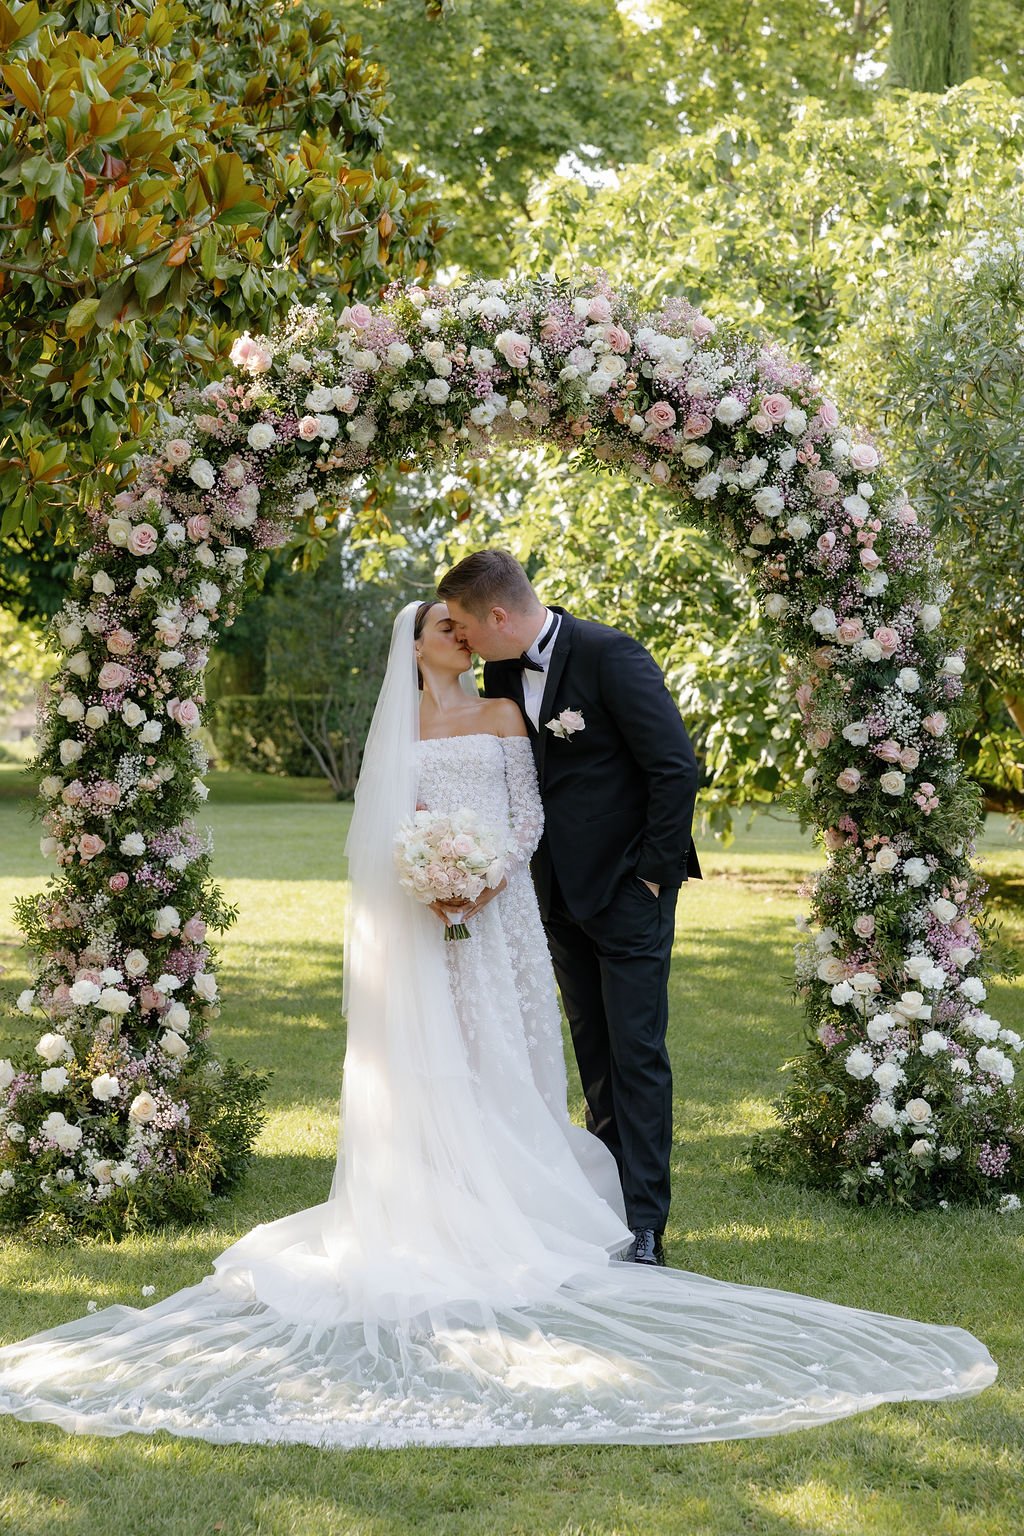 Romantic rose garden wedding ceremony in Provence, France